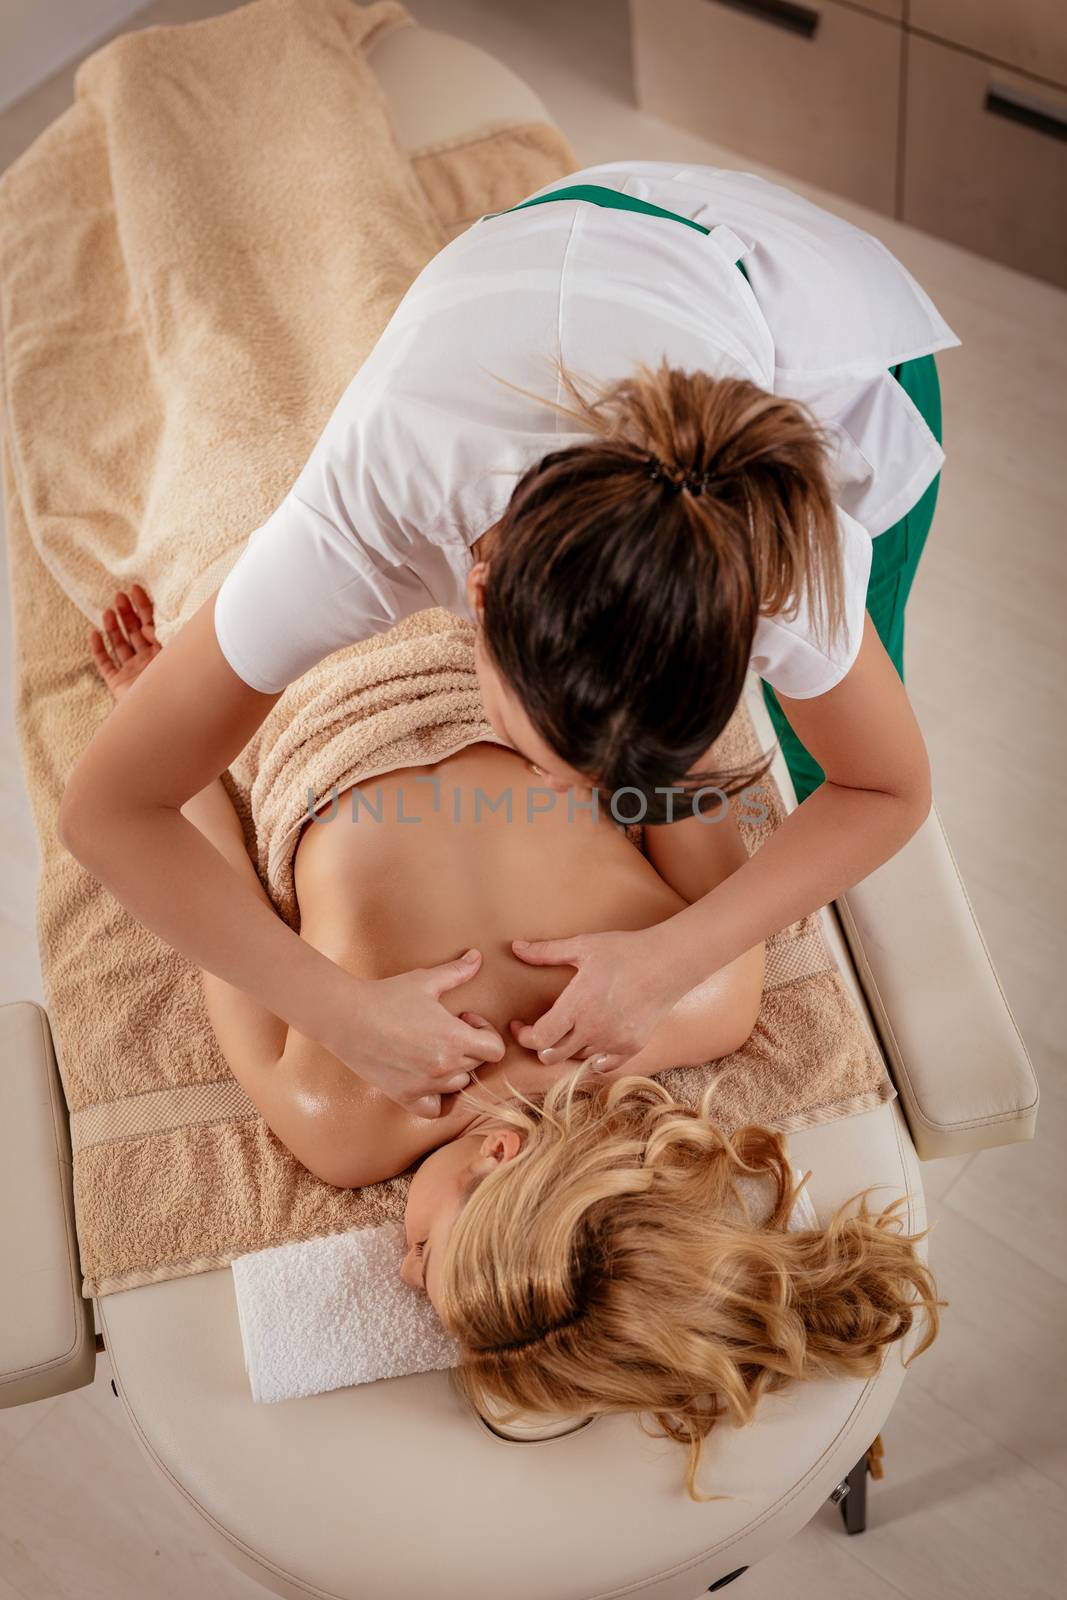 Shoulder Massage by MilanMarkovic78